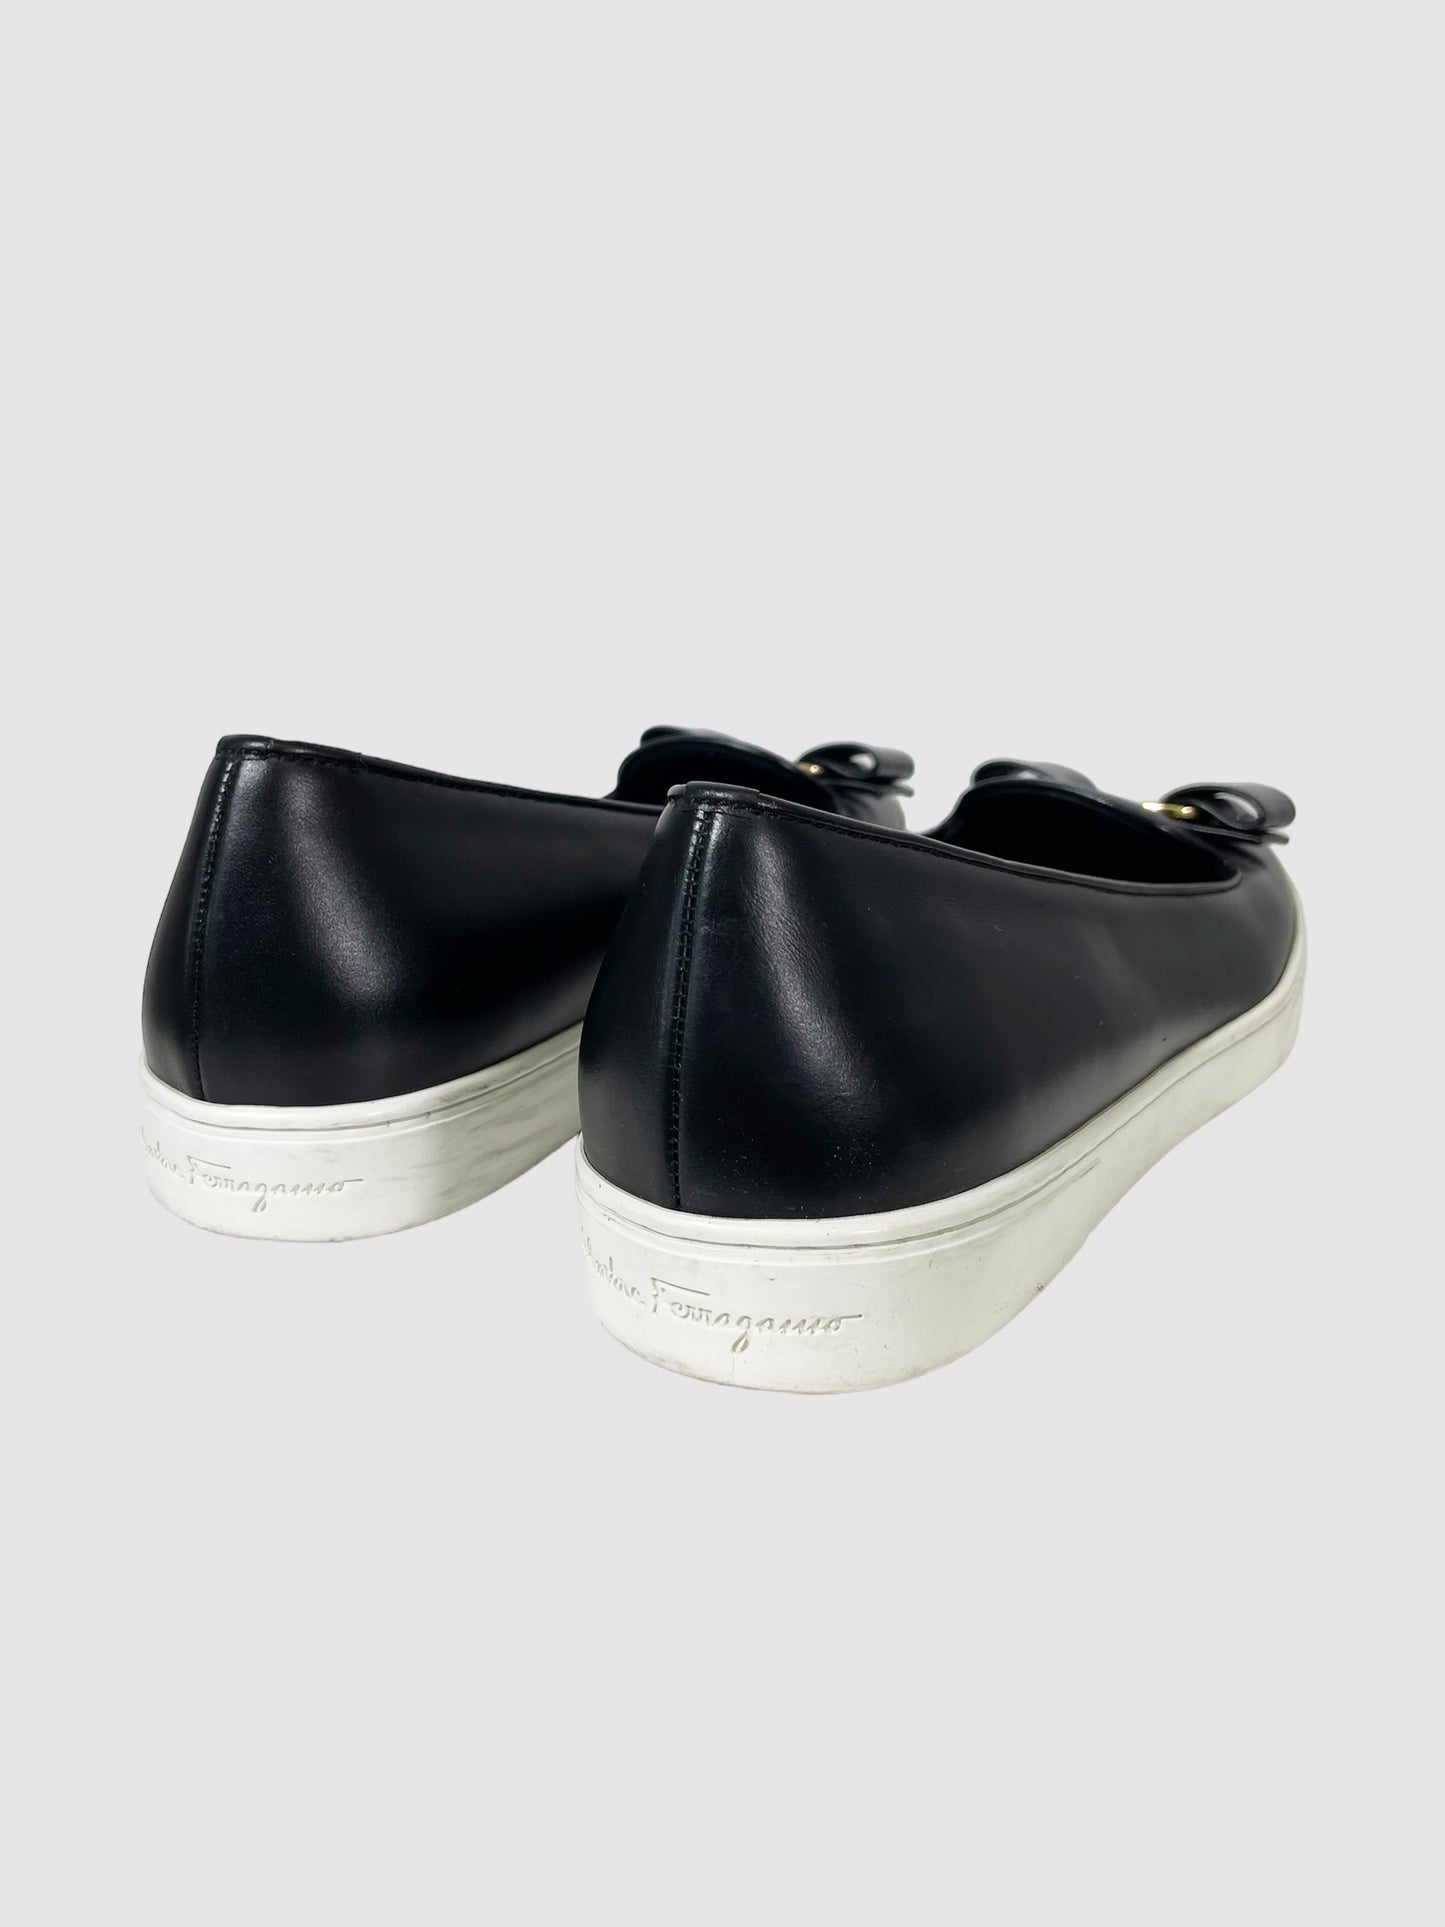 Salvatore Ferragamo Leather Bow Accents Flats - Size 7